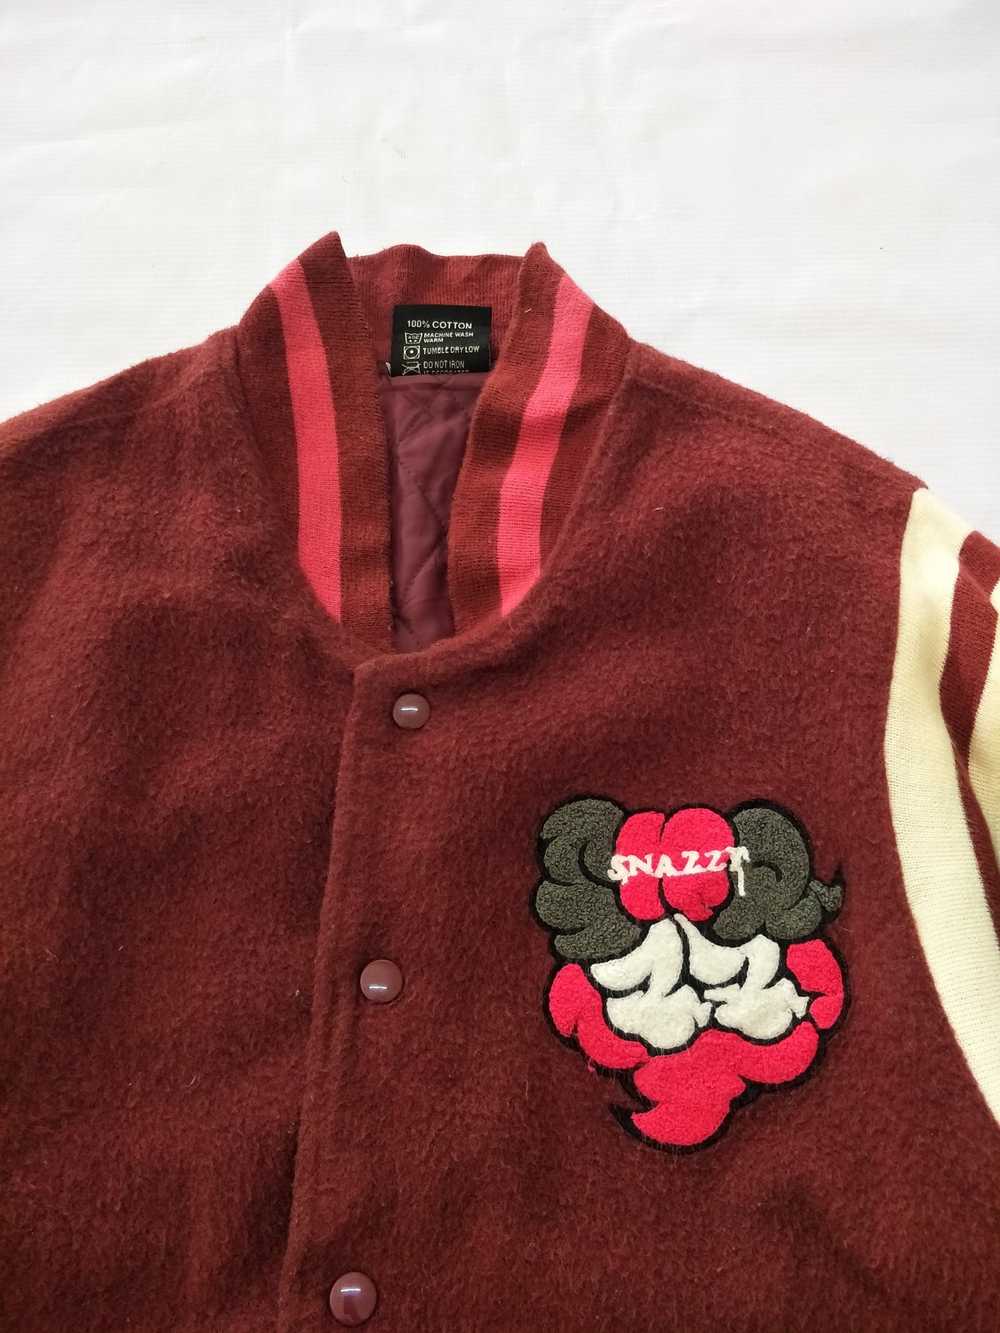 Japanese Brand Snazzy Varsity Wool Jacket - image 3